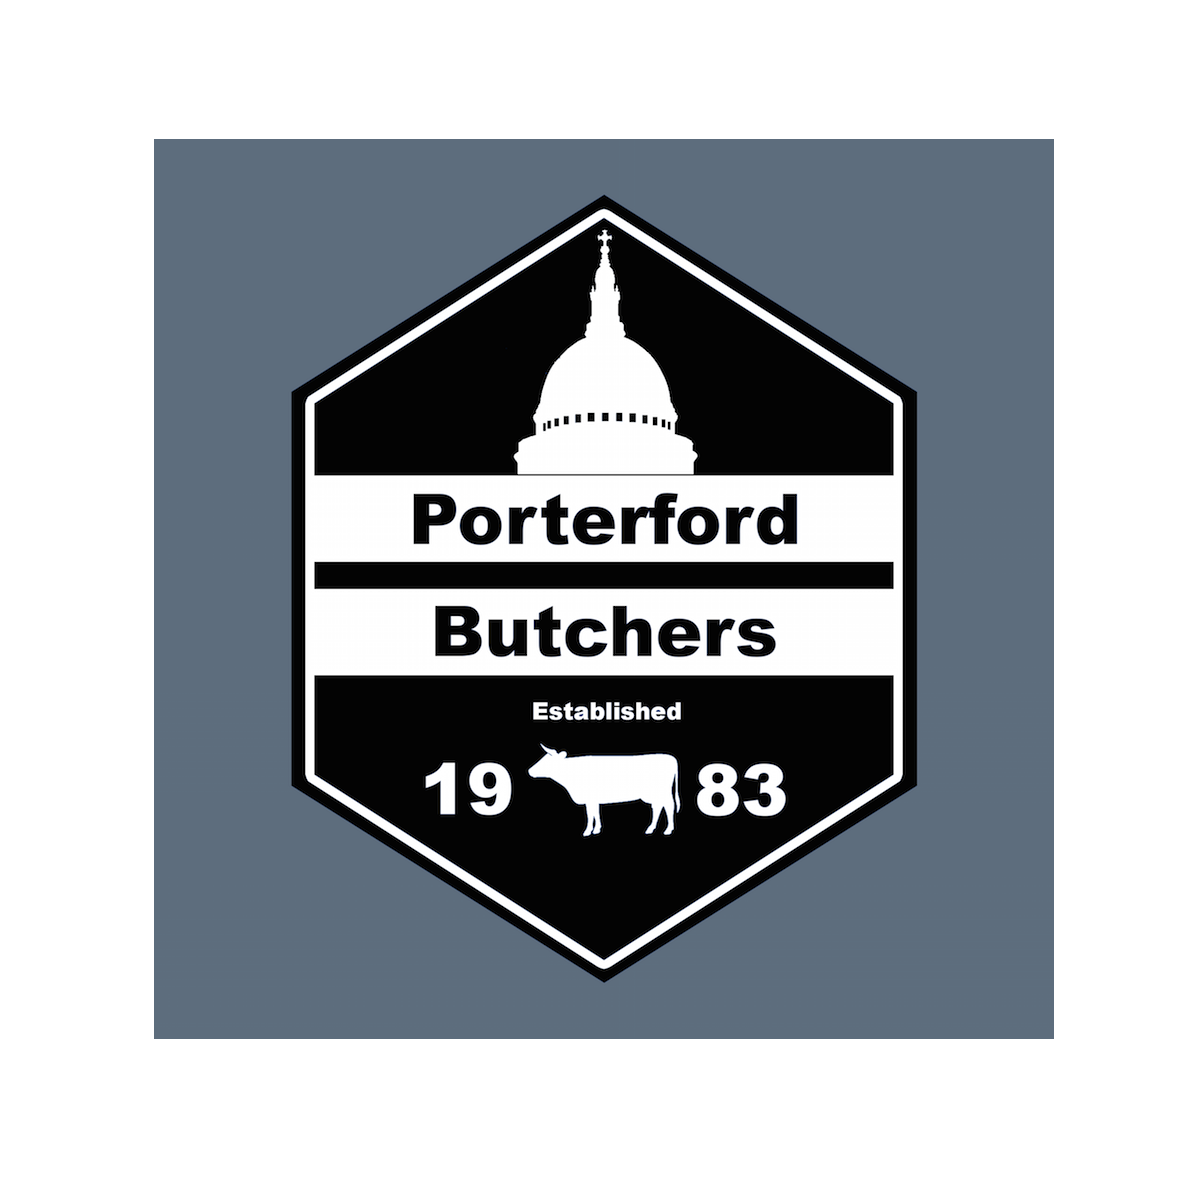 Porterford Butchers brand logo